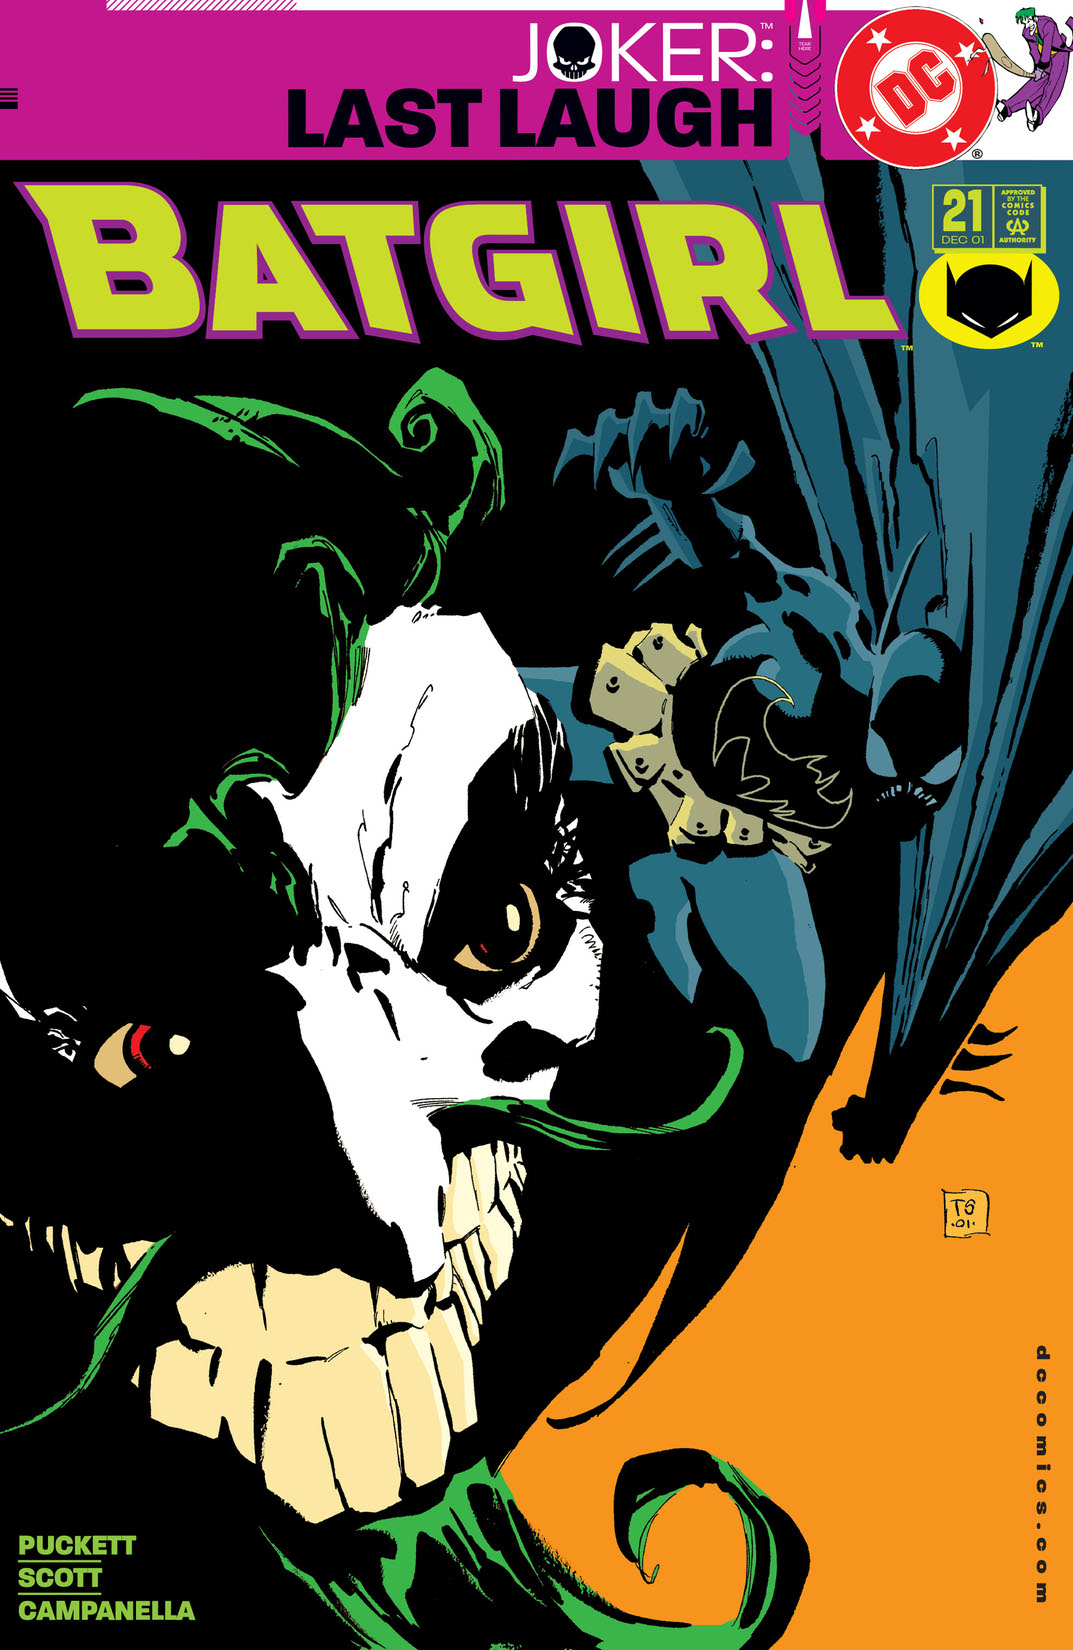 Batgirl (2000-) #21 preview images